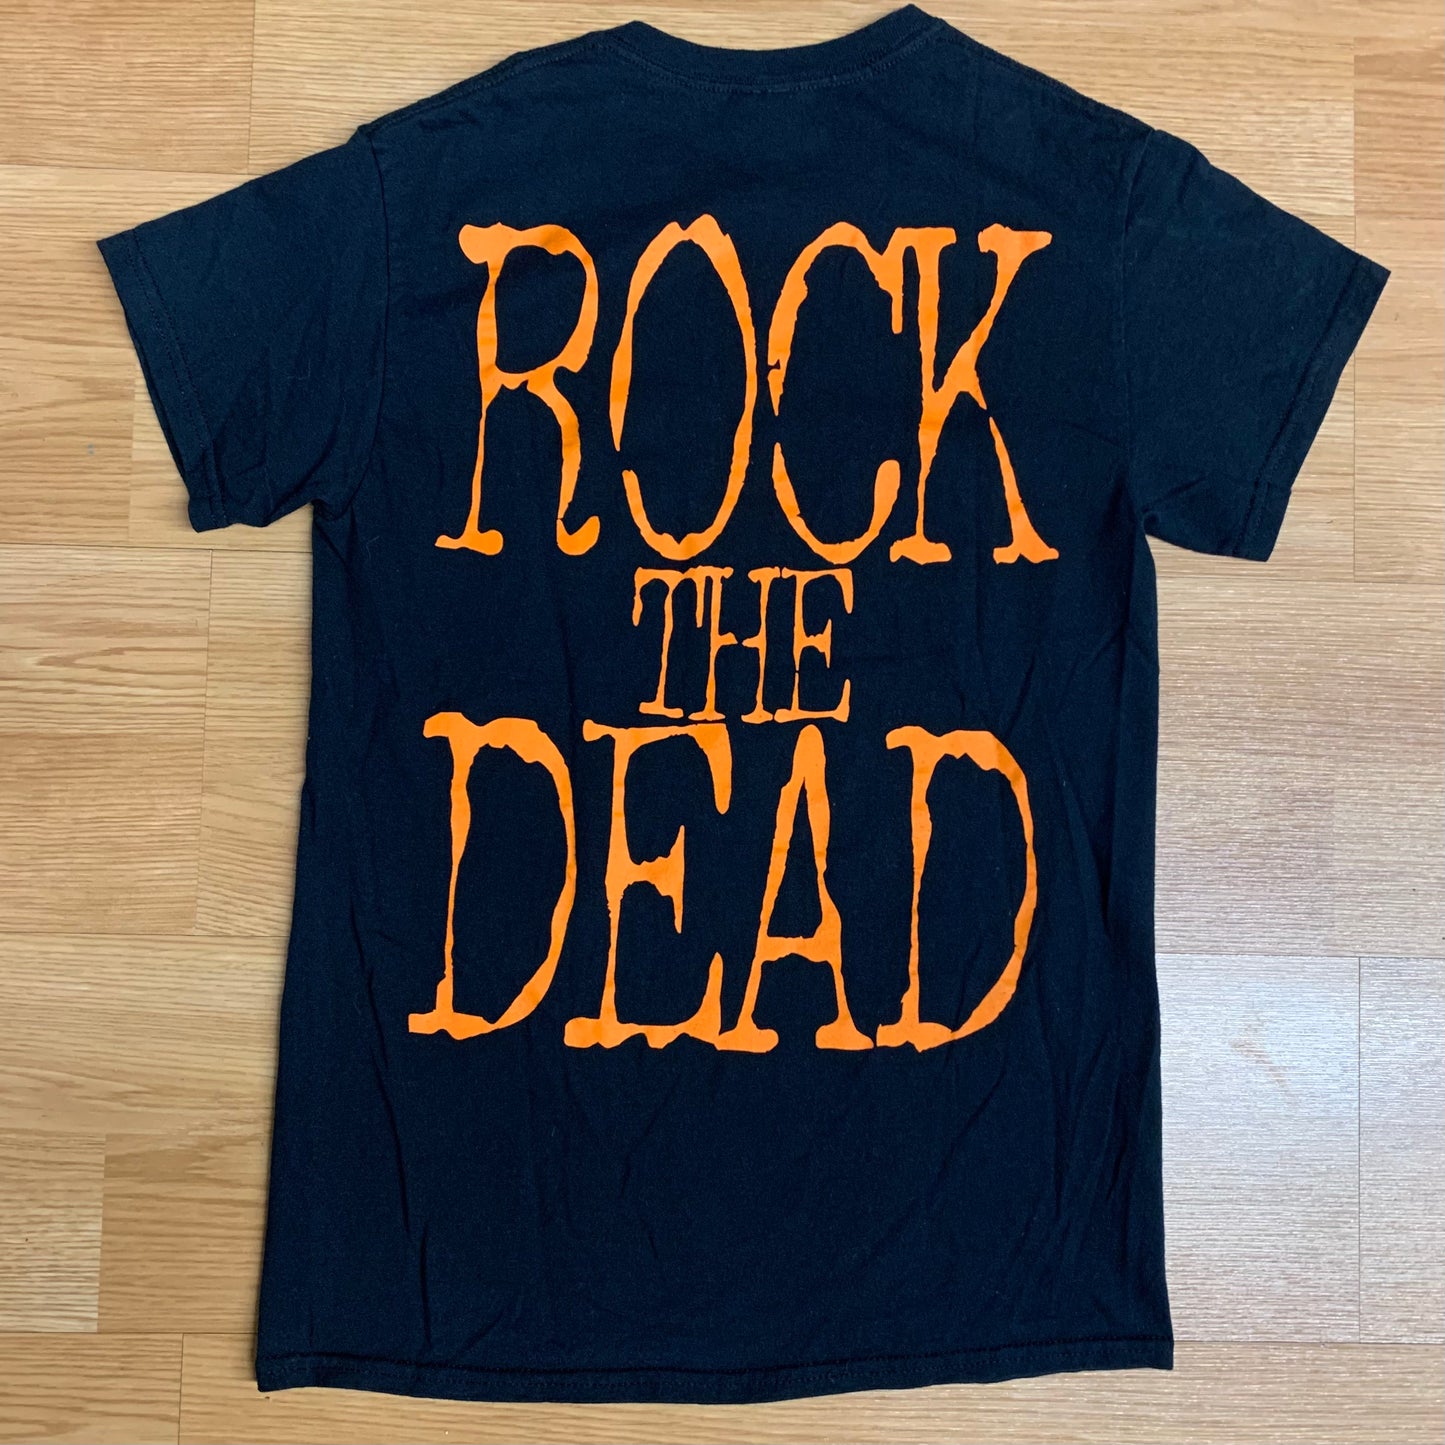 Twiztid Rock The Dead S